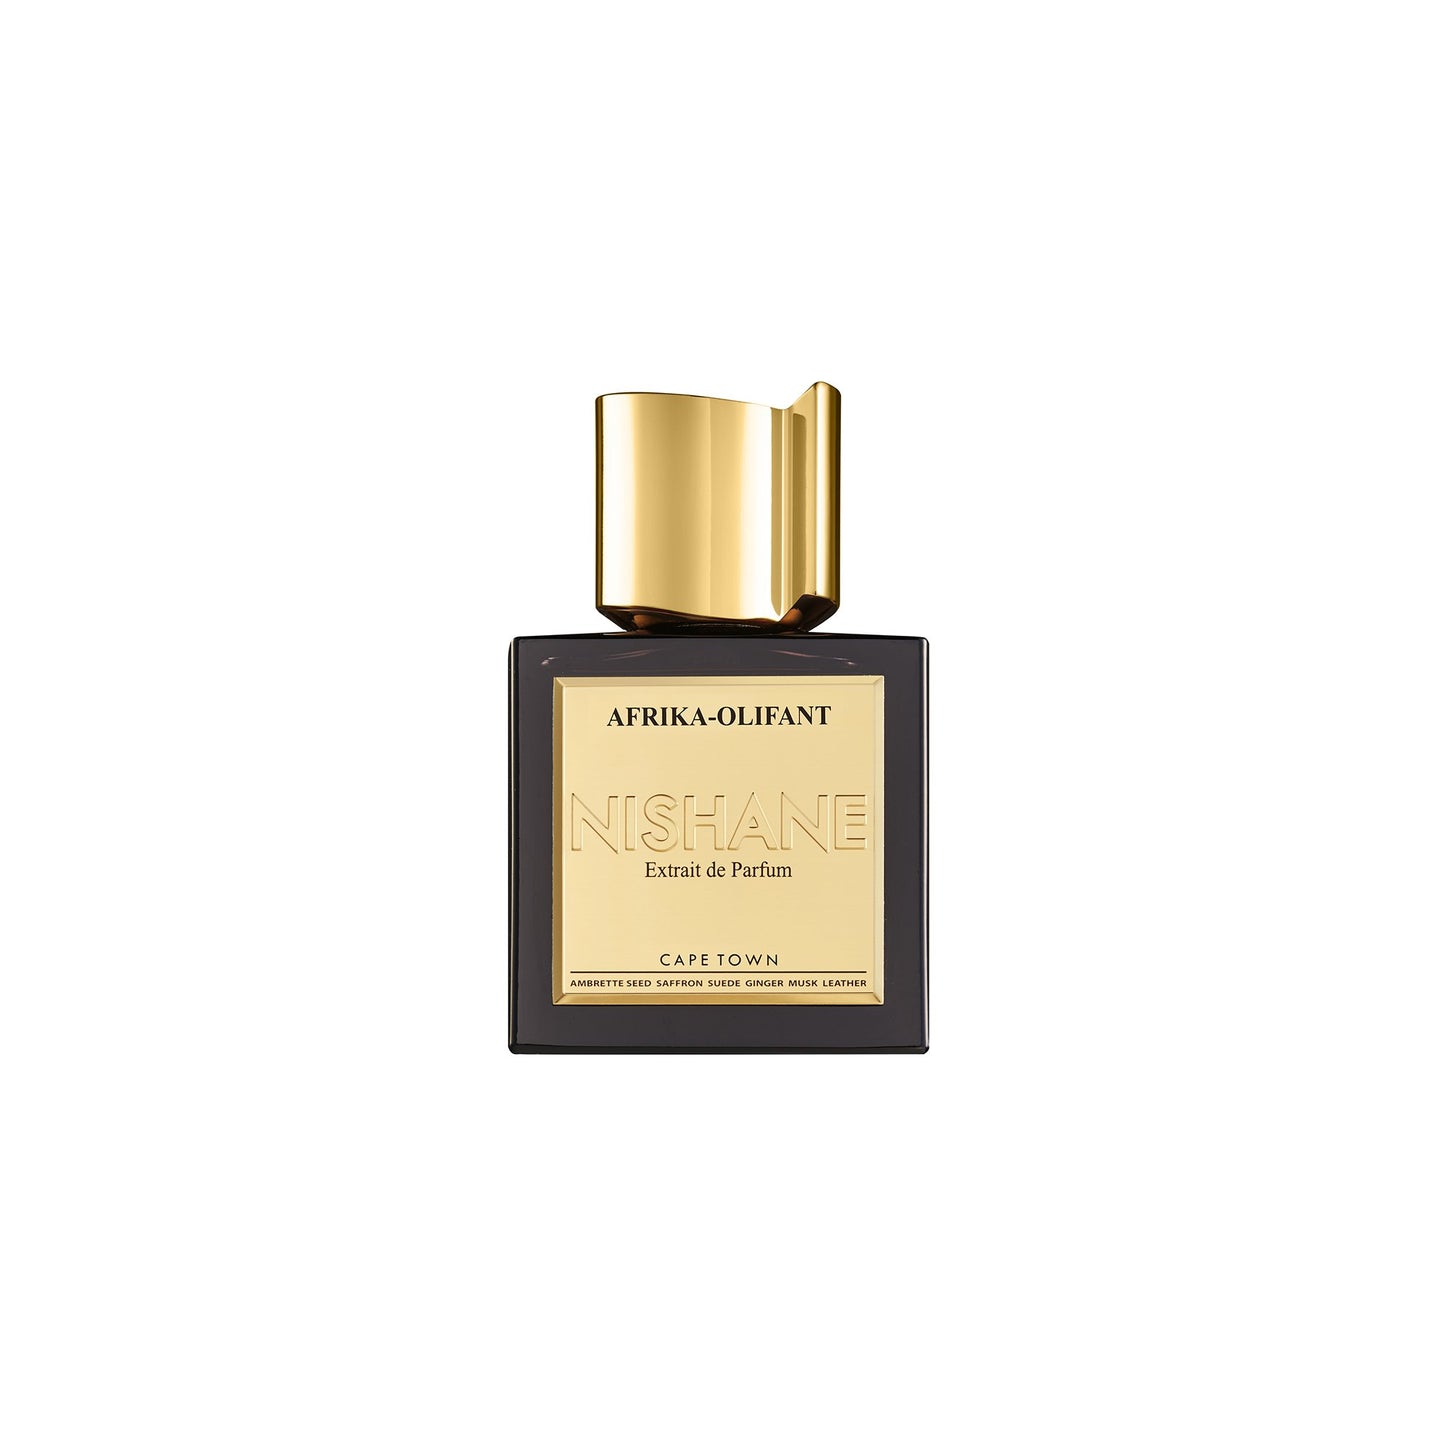 Afrika-Olifant 1.5ml Sample Vial - Extrait de Parfum